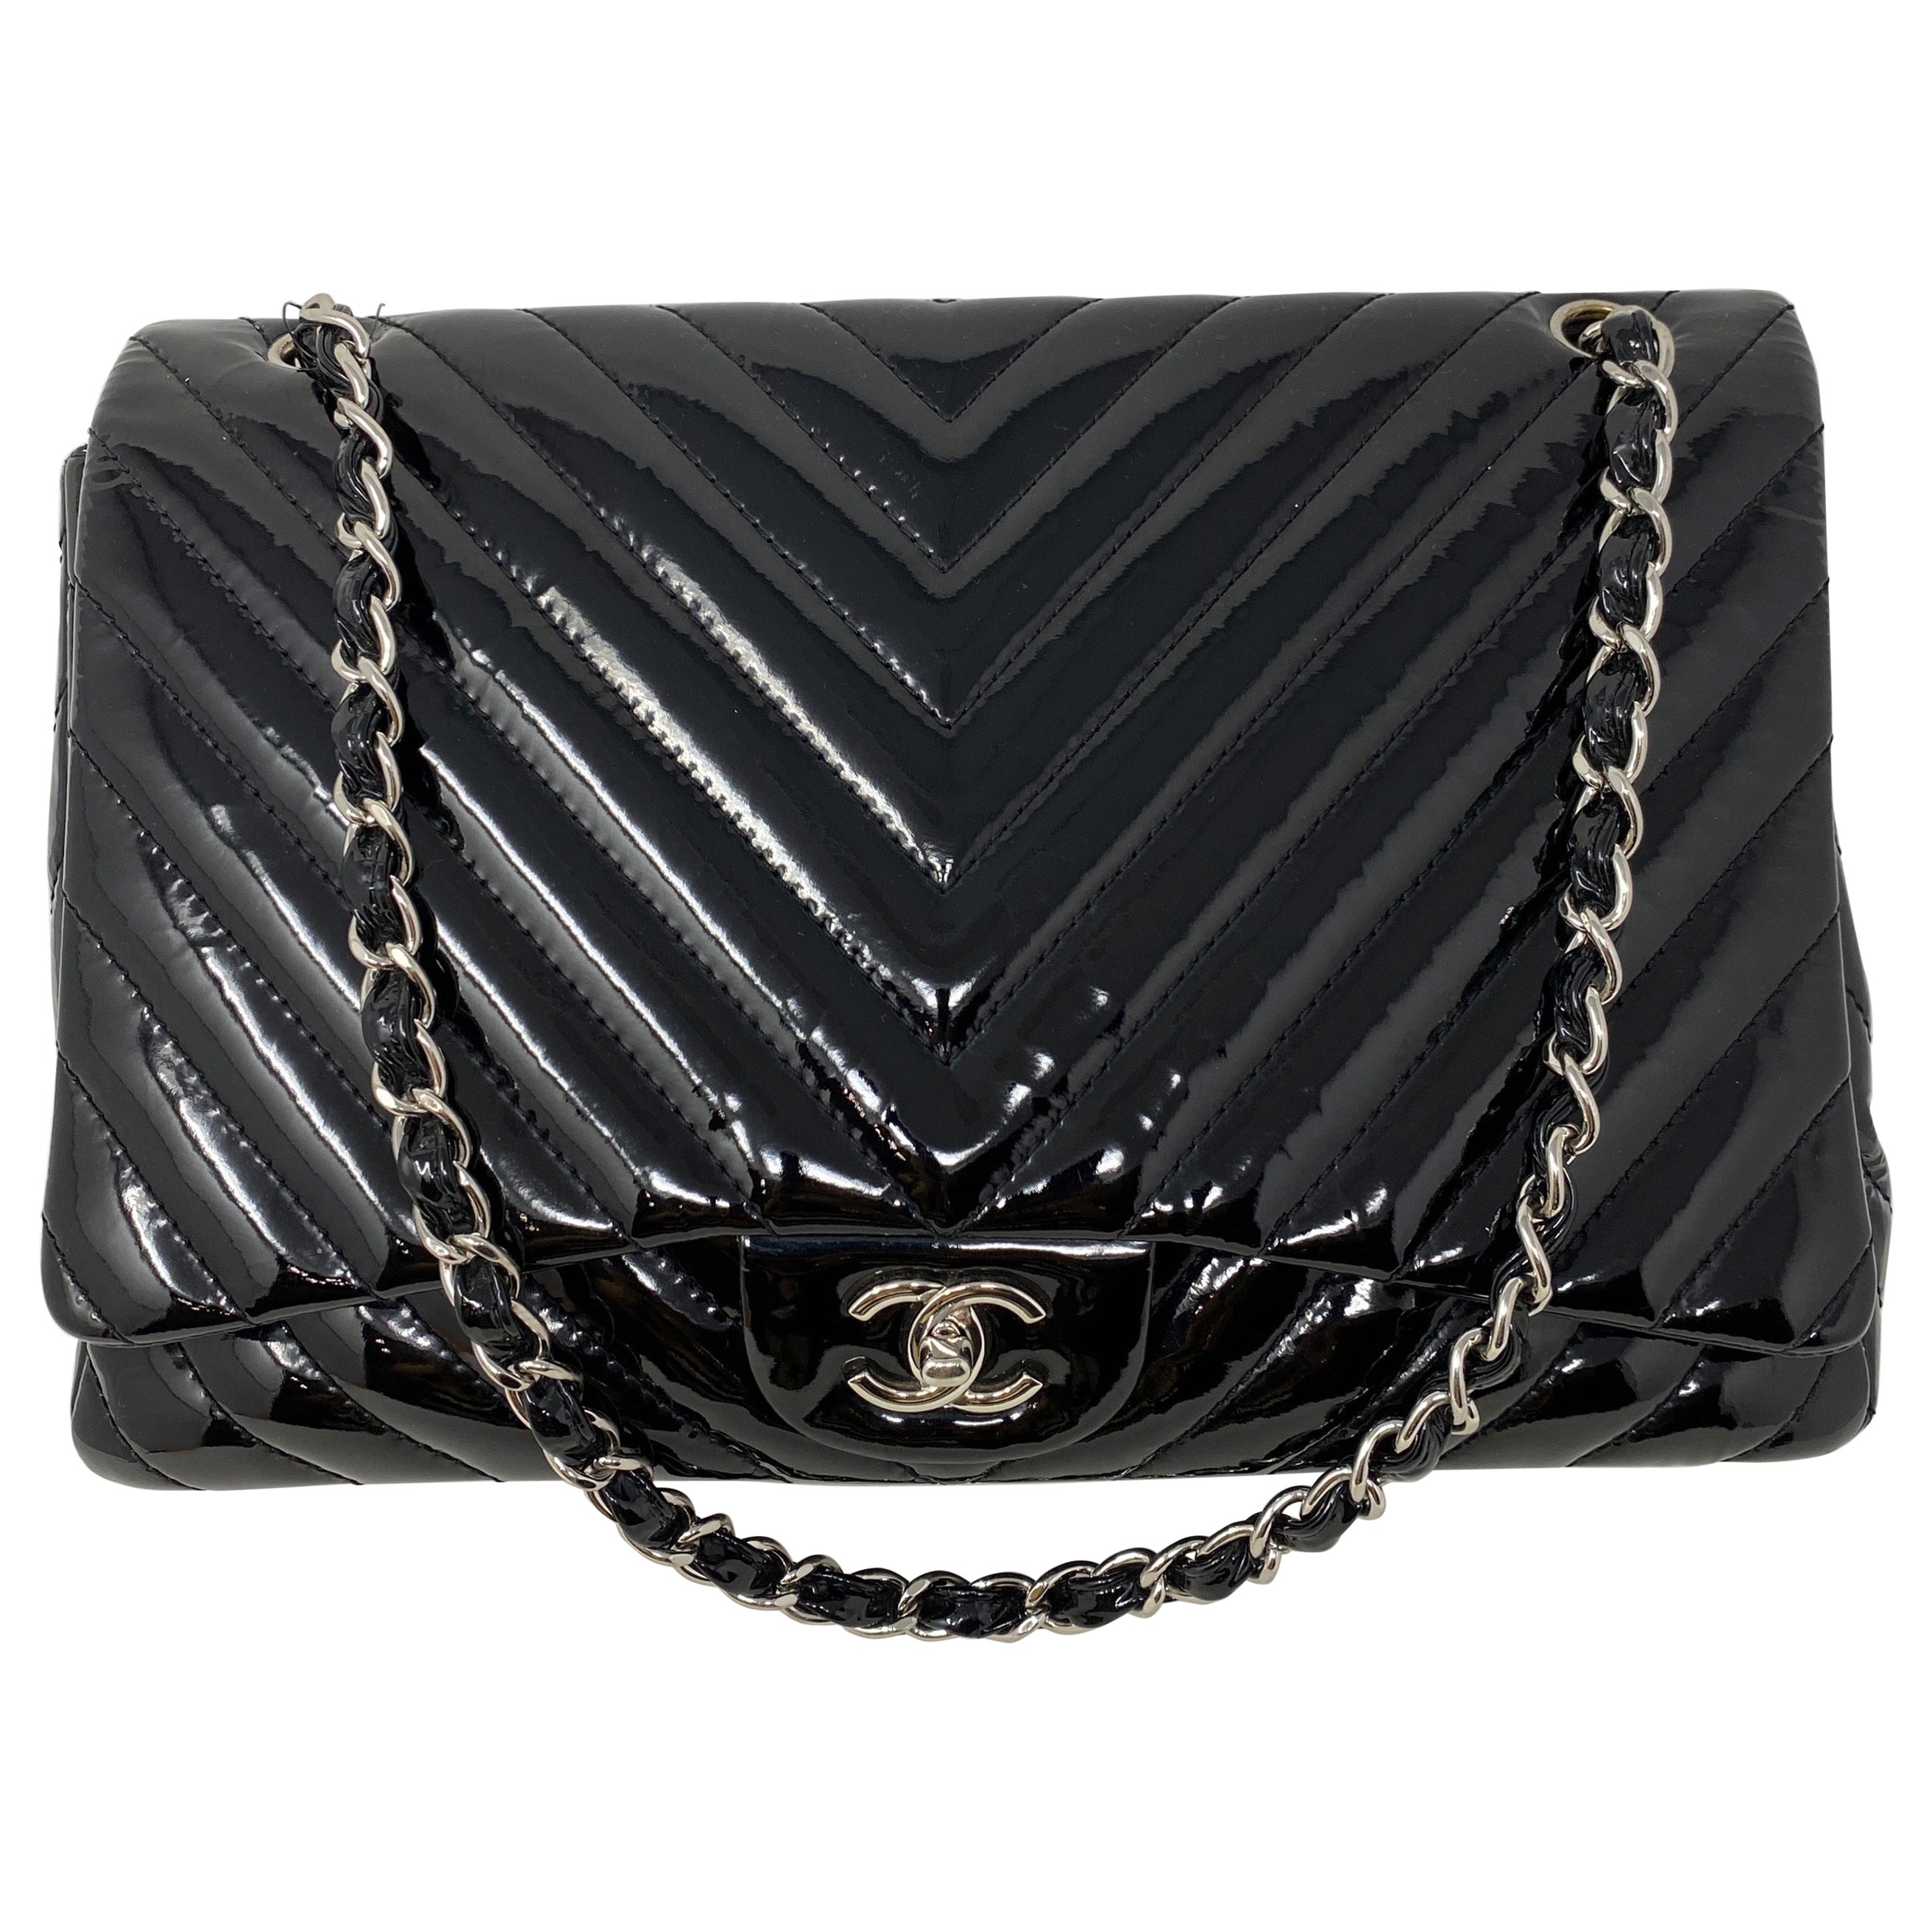 Chanel Black Jumbo Patent Leather Bag